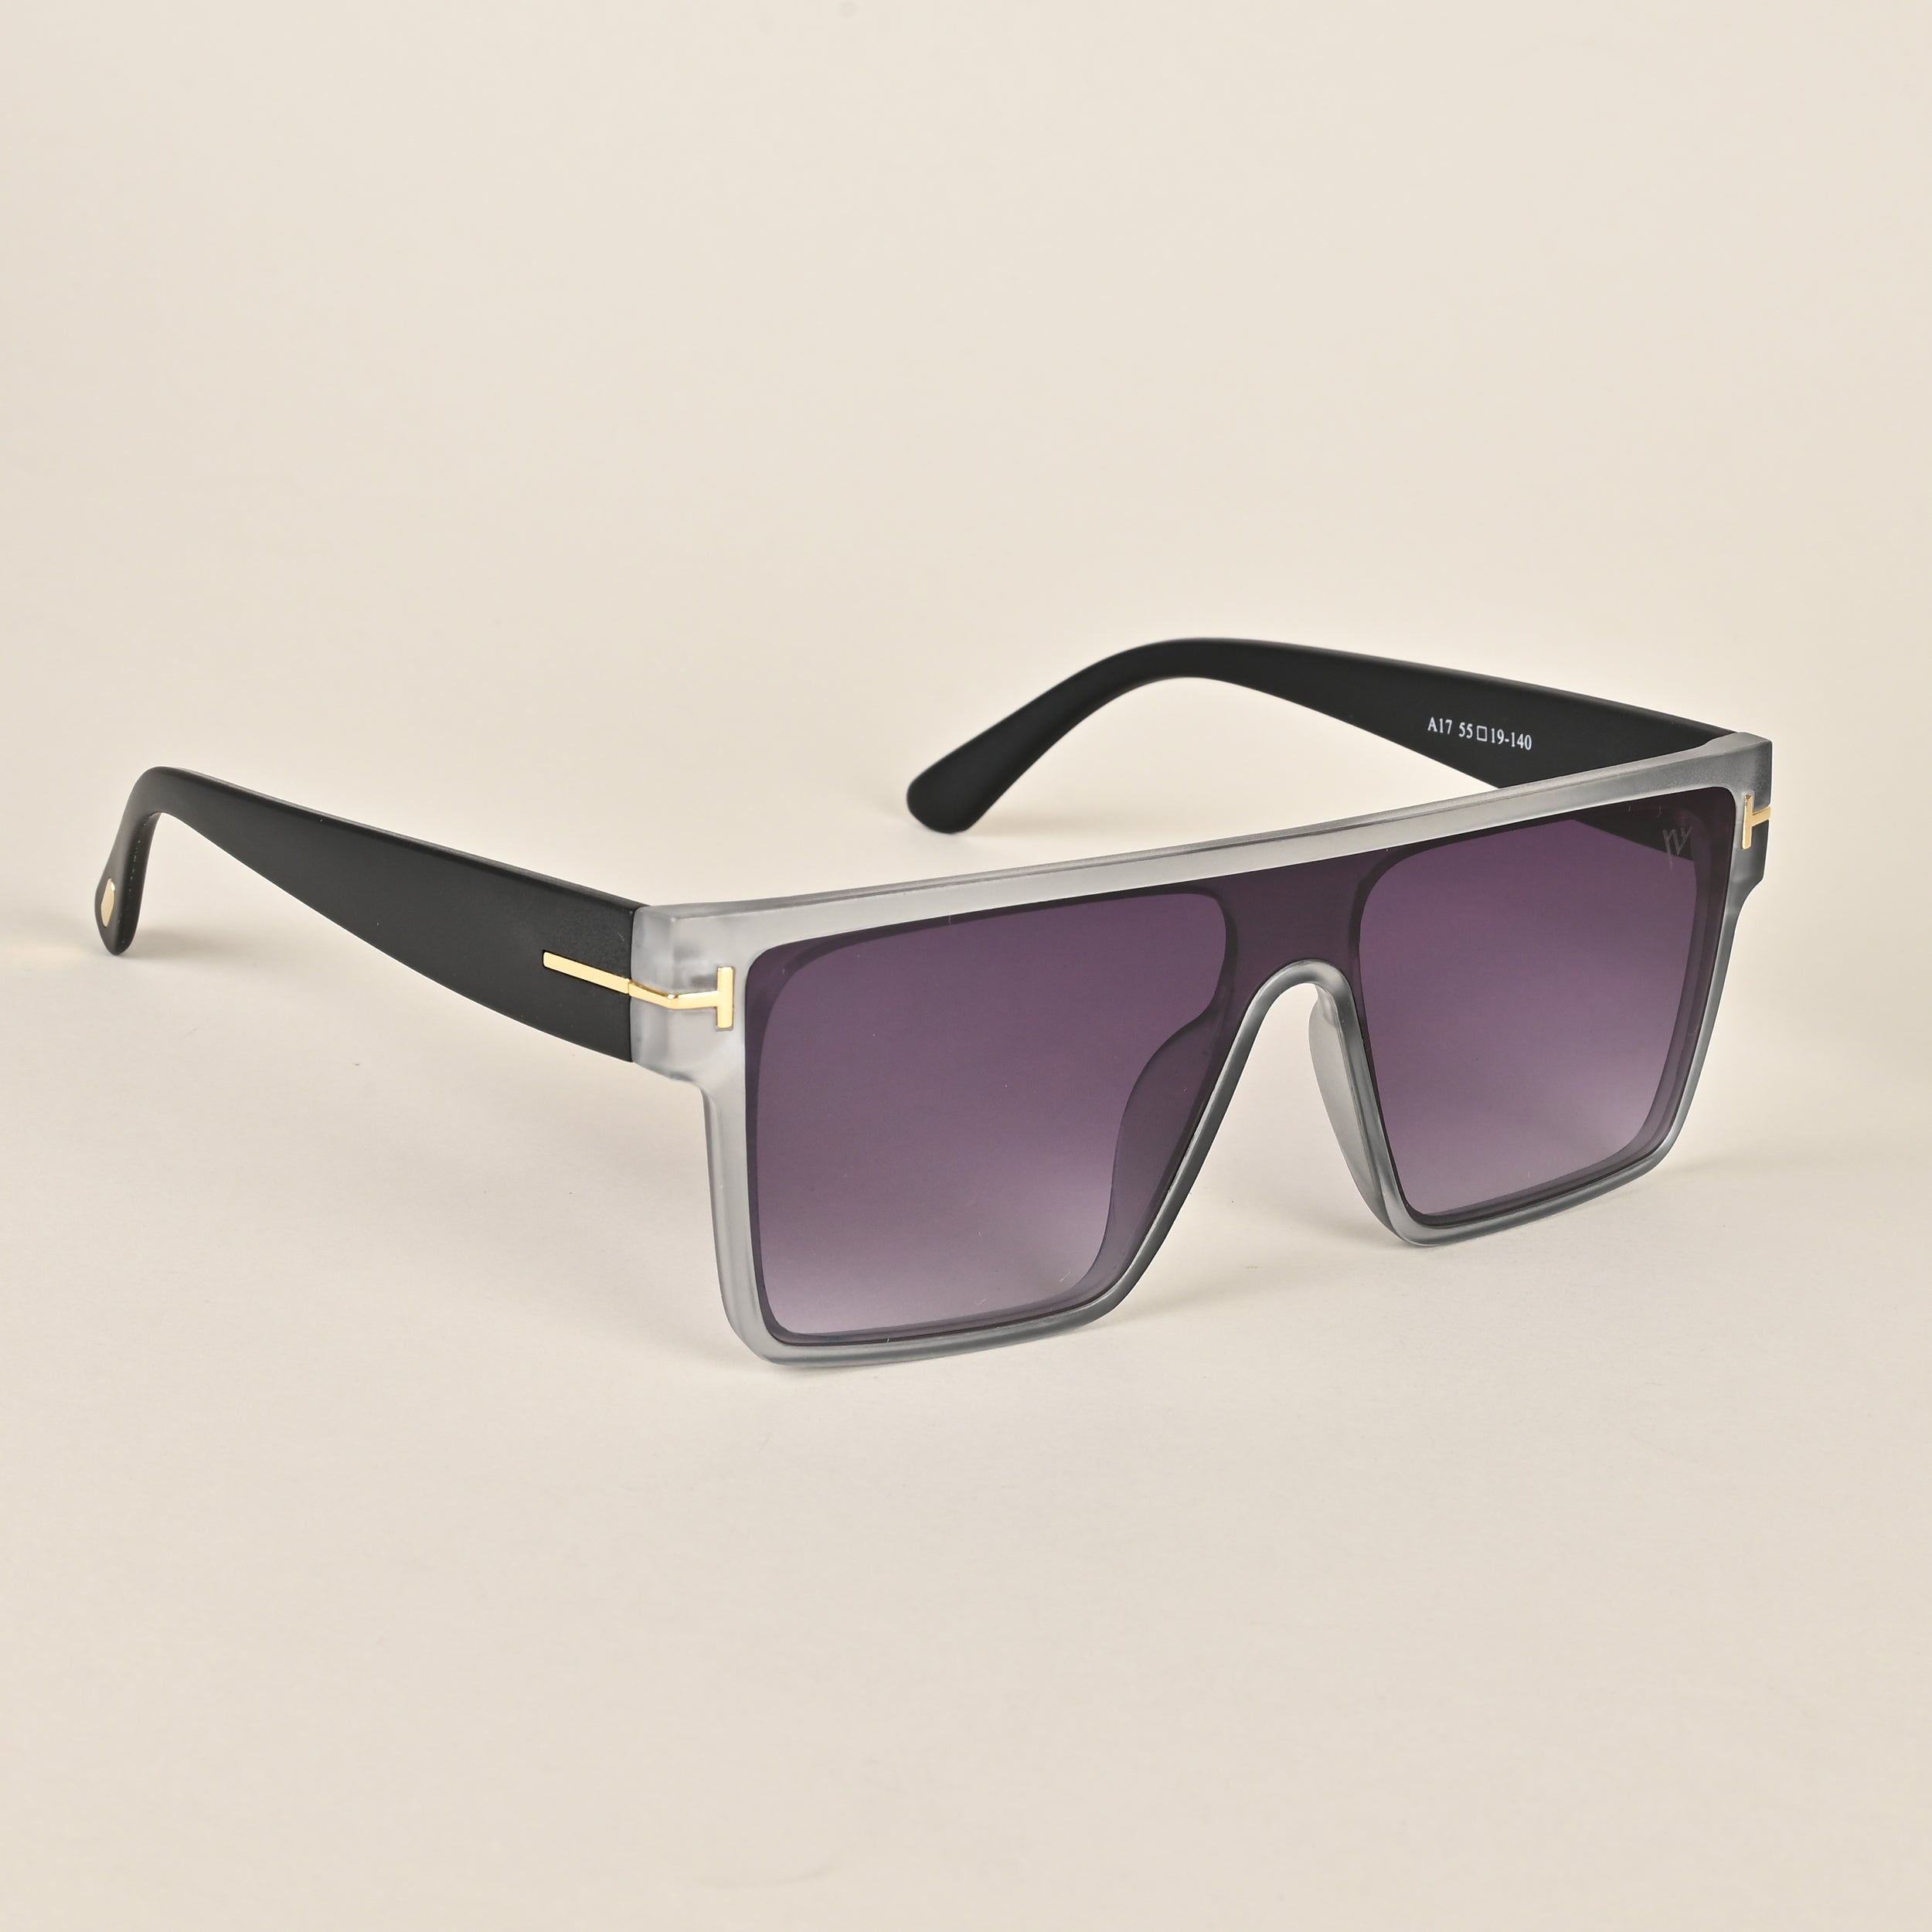 Voyage Grey Wayfarer Sunglasses - MG3937